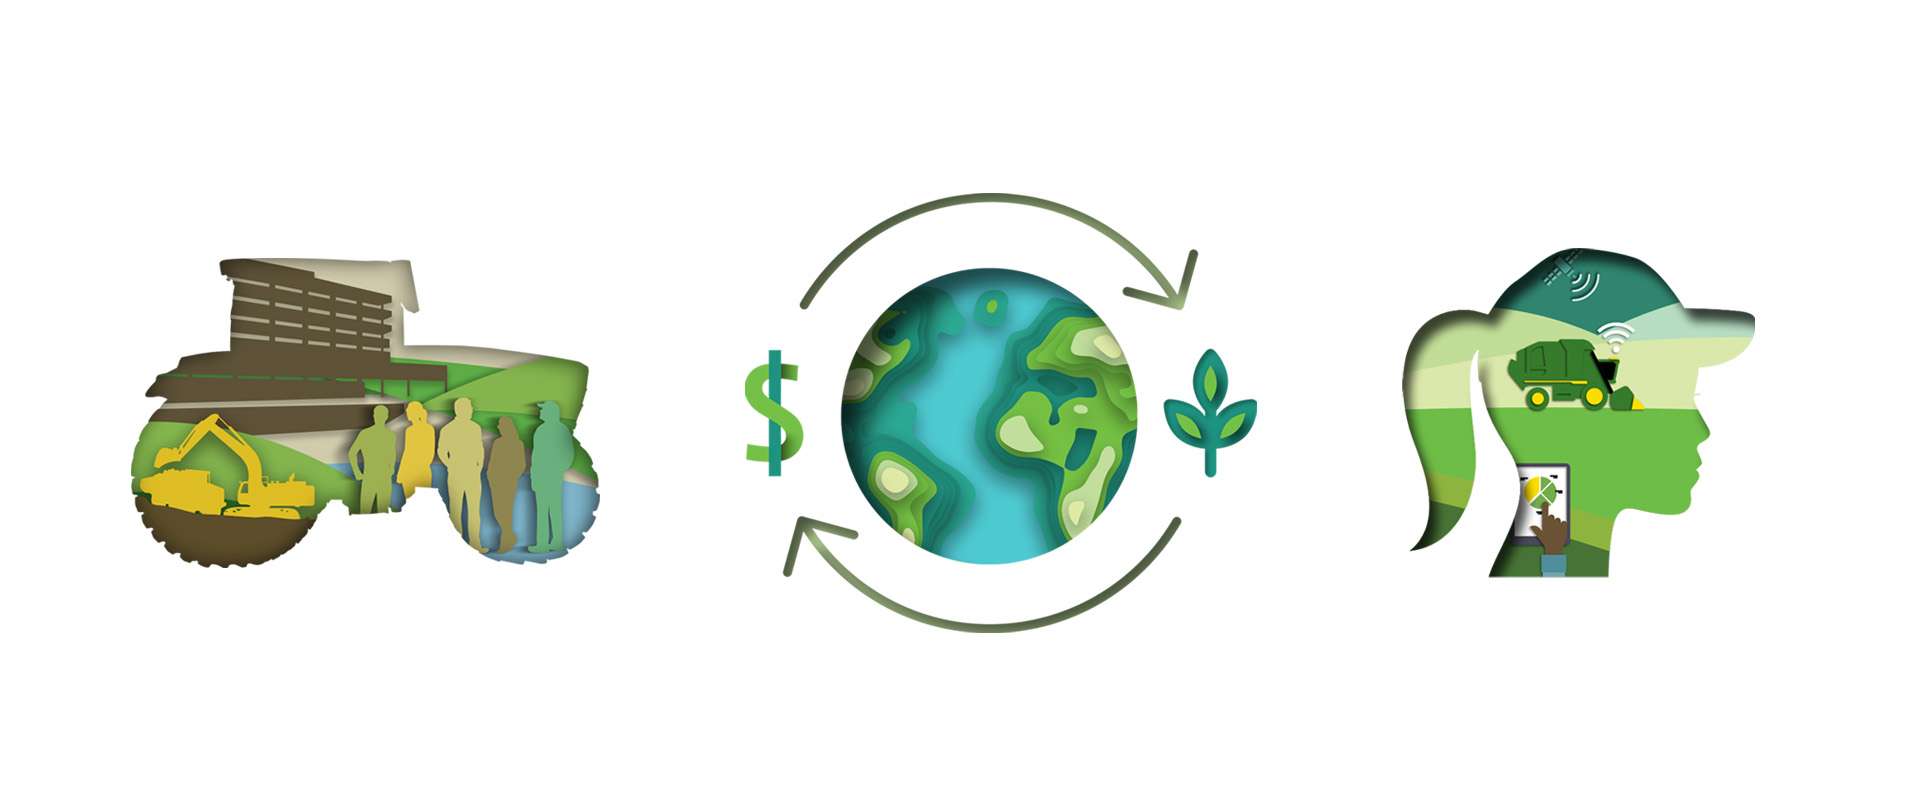 John Deere Sustainability Report illustrations